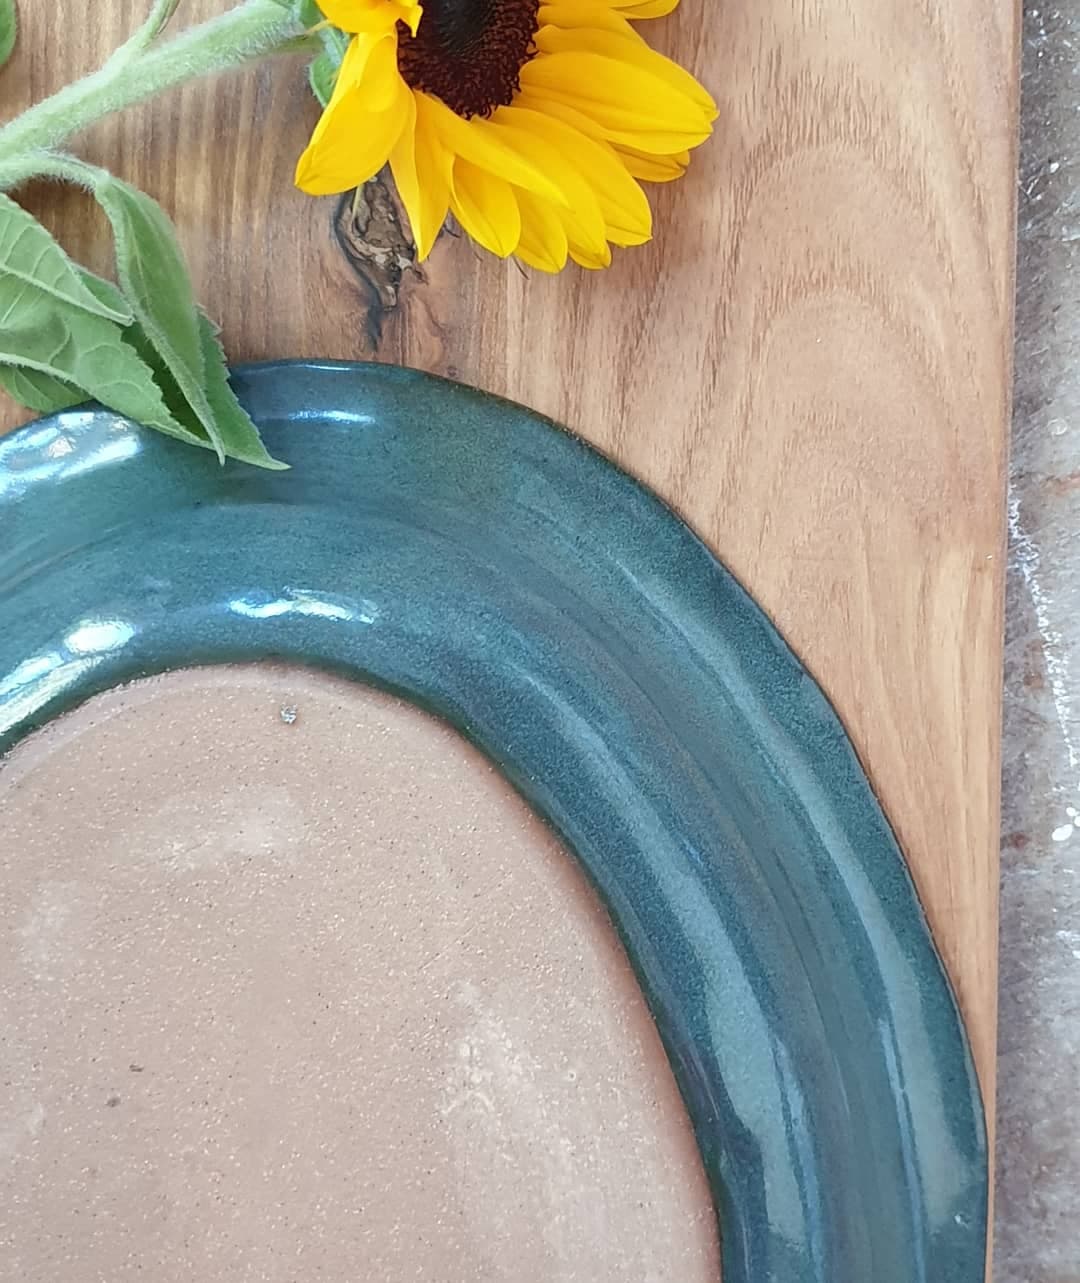 Sunflower and Summer flowers